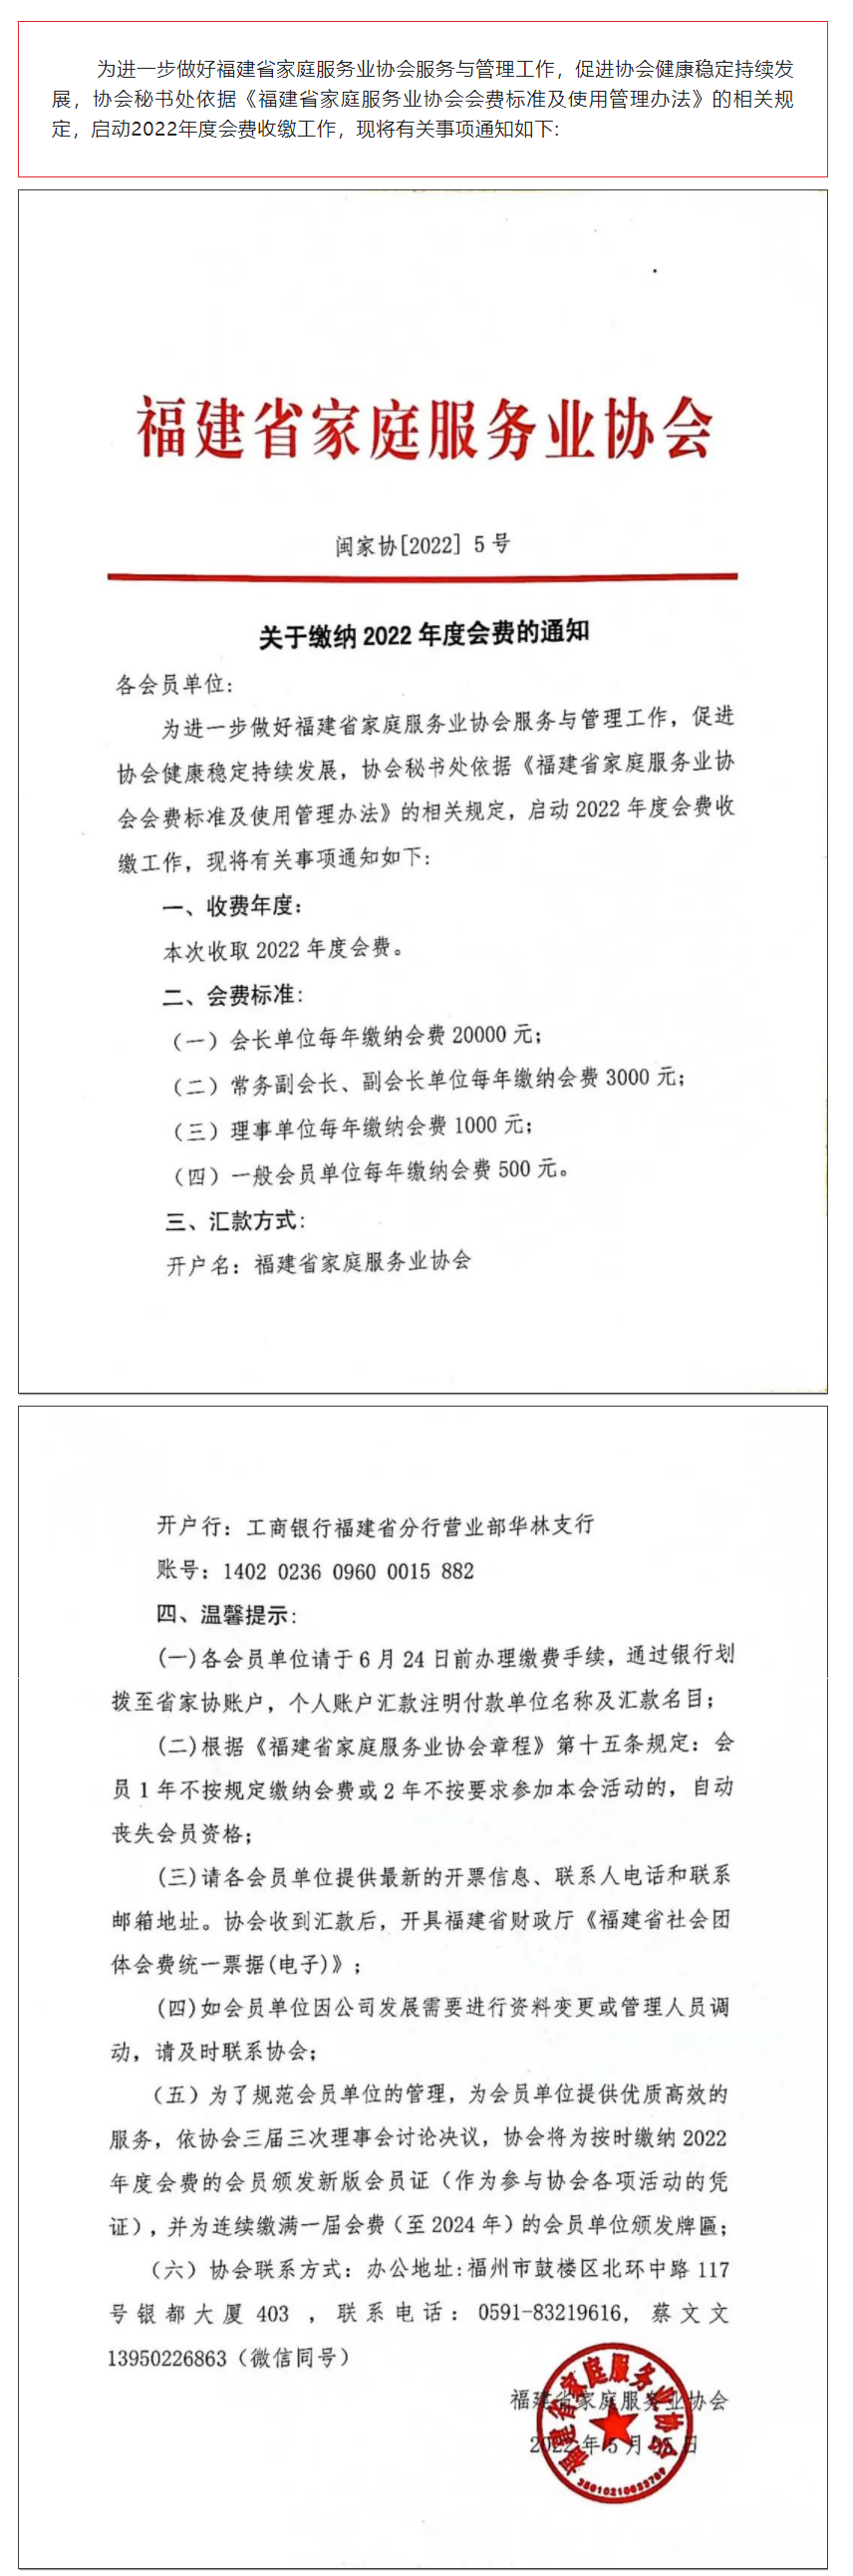 screenshot-mp.weixin.qq.com-2022.06.23-13_38_24.png